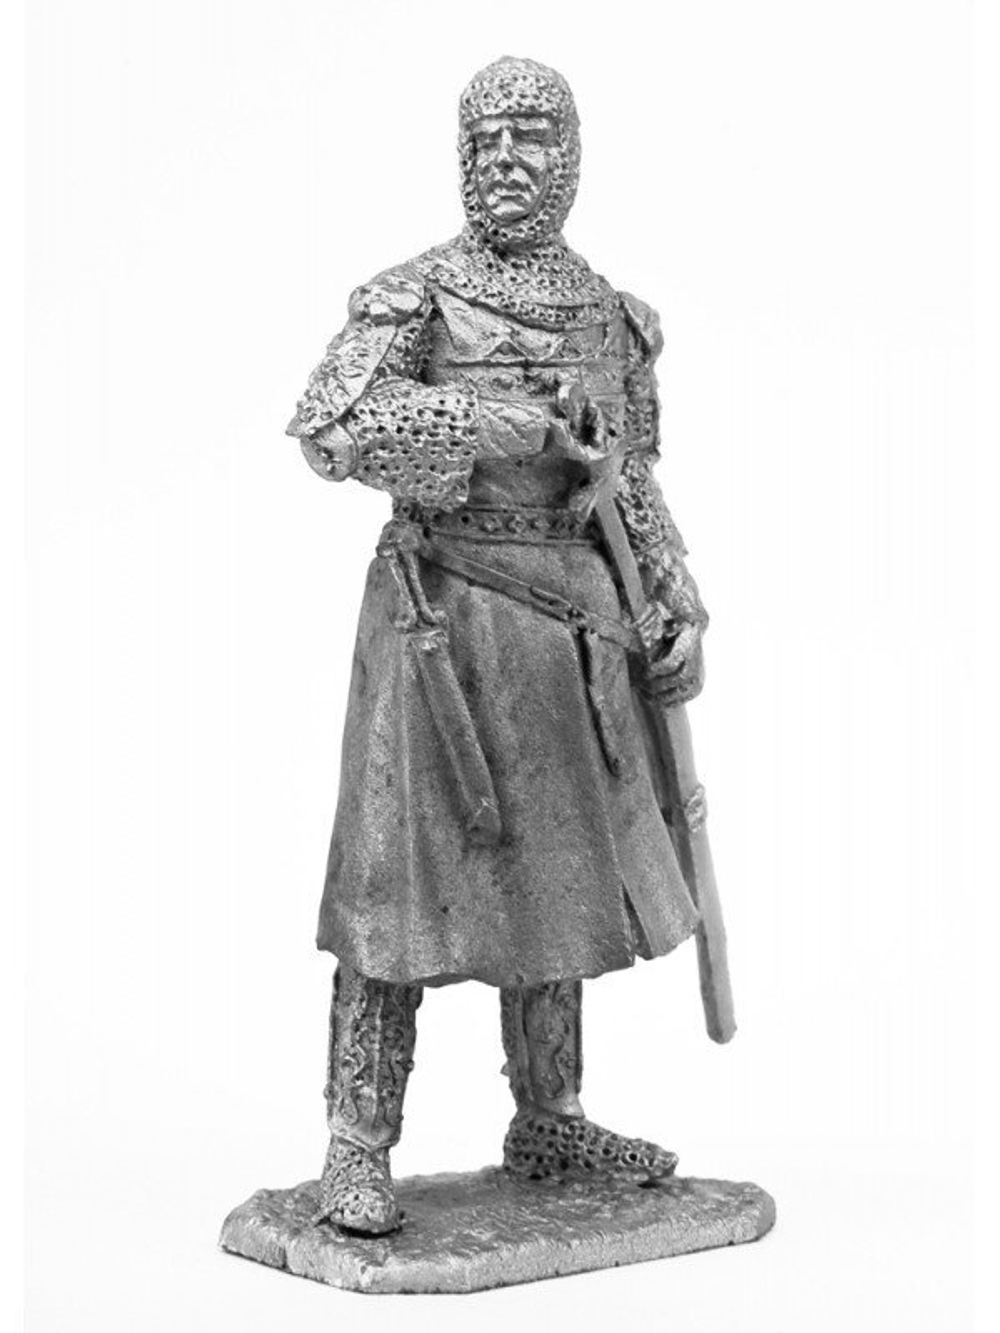 Оловянный солдатик Томазо Булданус, итальянский рыцарь